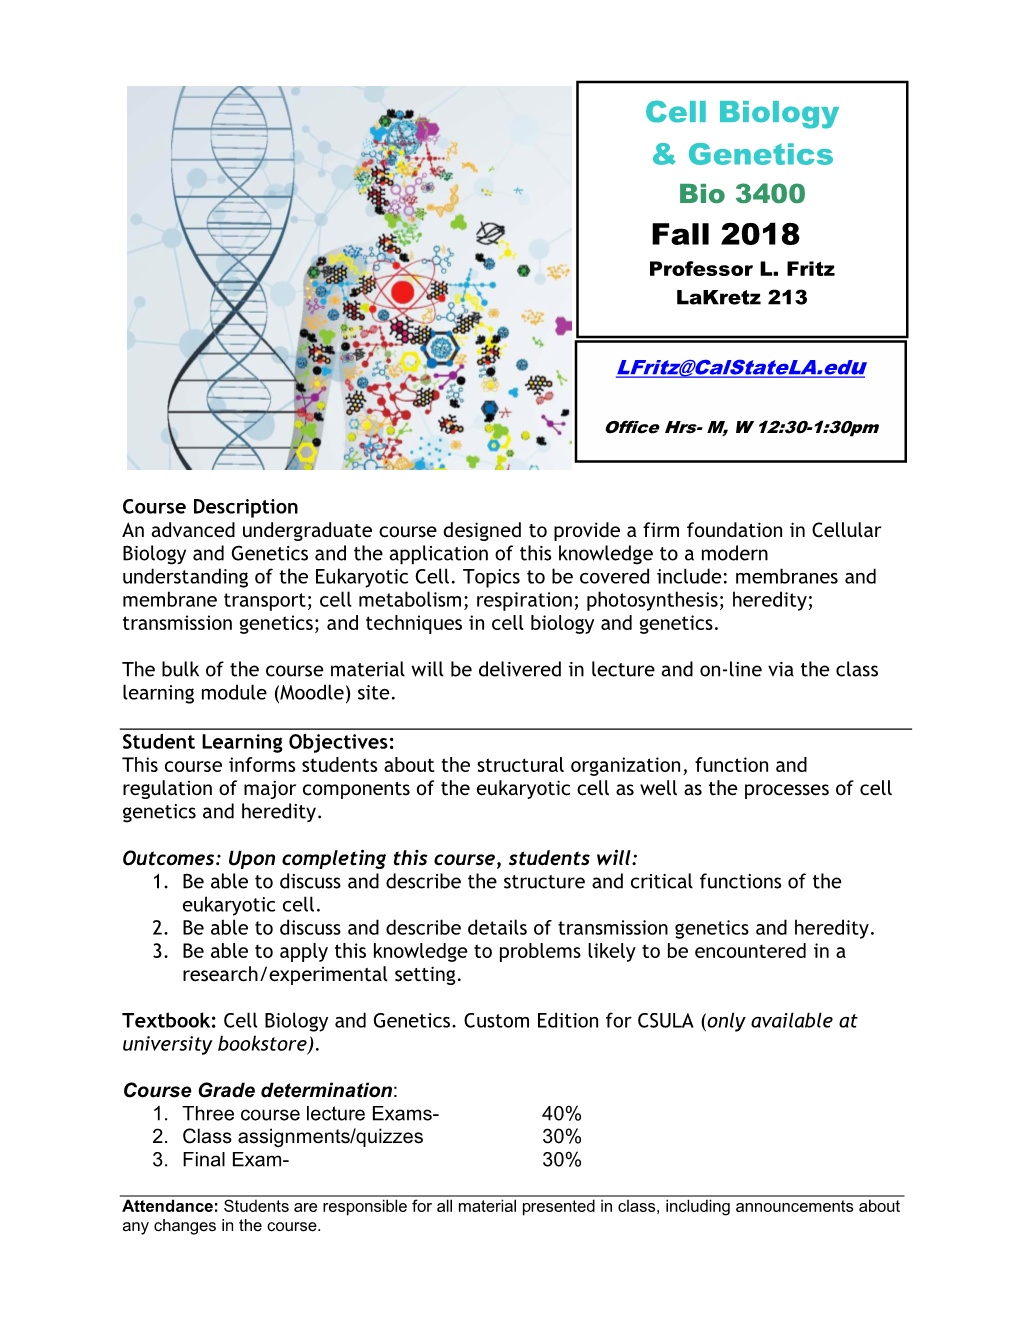 Cell Biology & Genetics Fall 2018